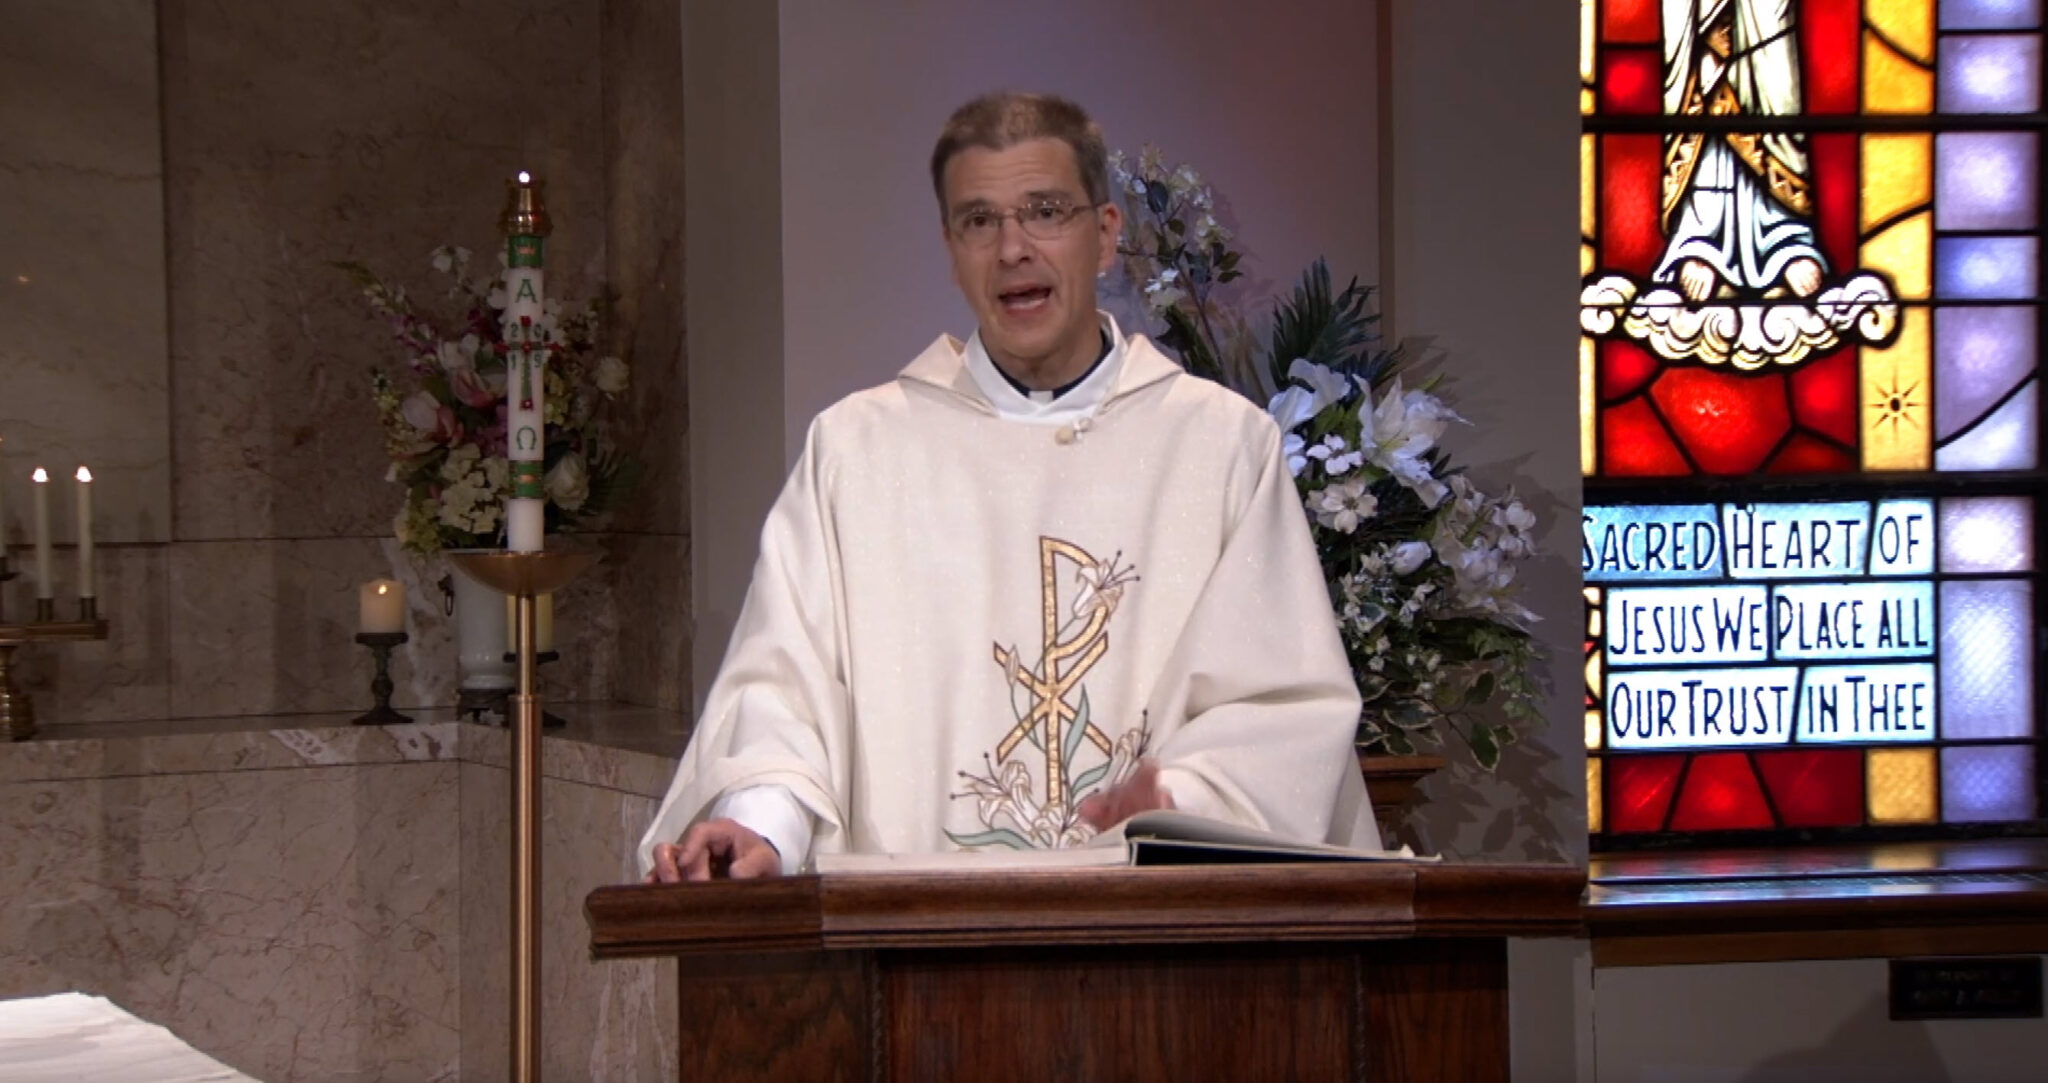 Father Tom Baldonieri celebrates the Sixth Sunday of Easter